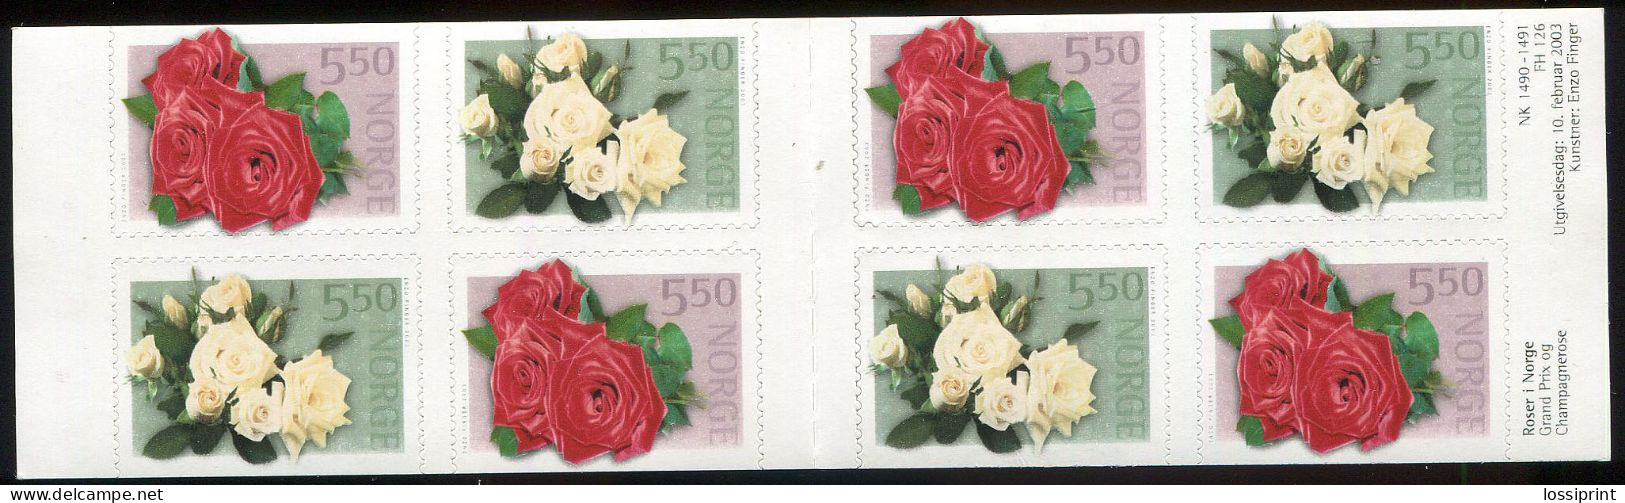 Norway:Unused Stamps Booklet Flowers, 2003, MNH - Rosen